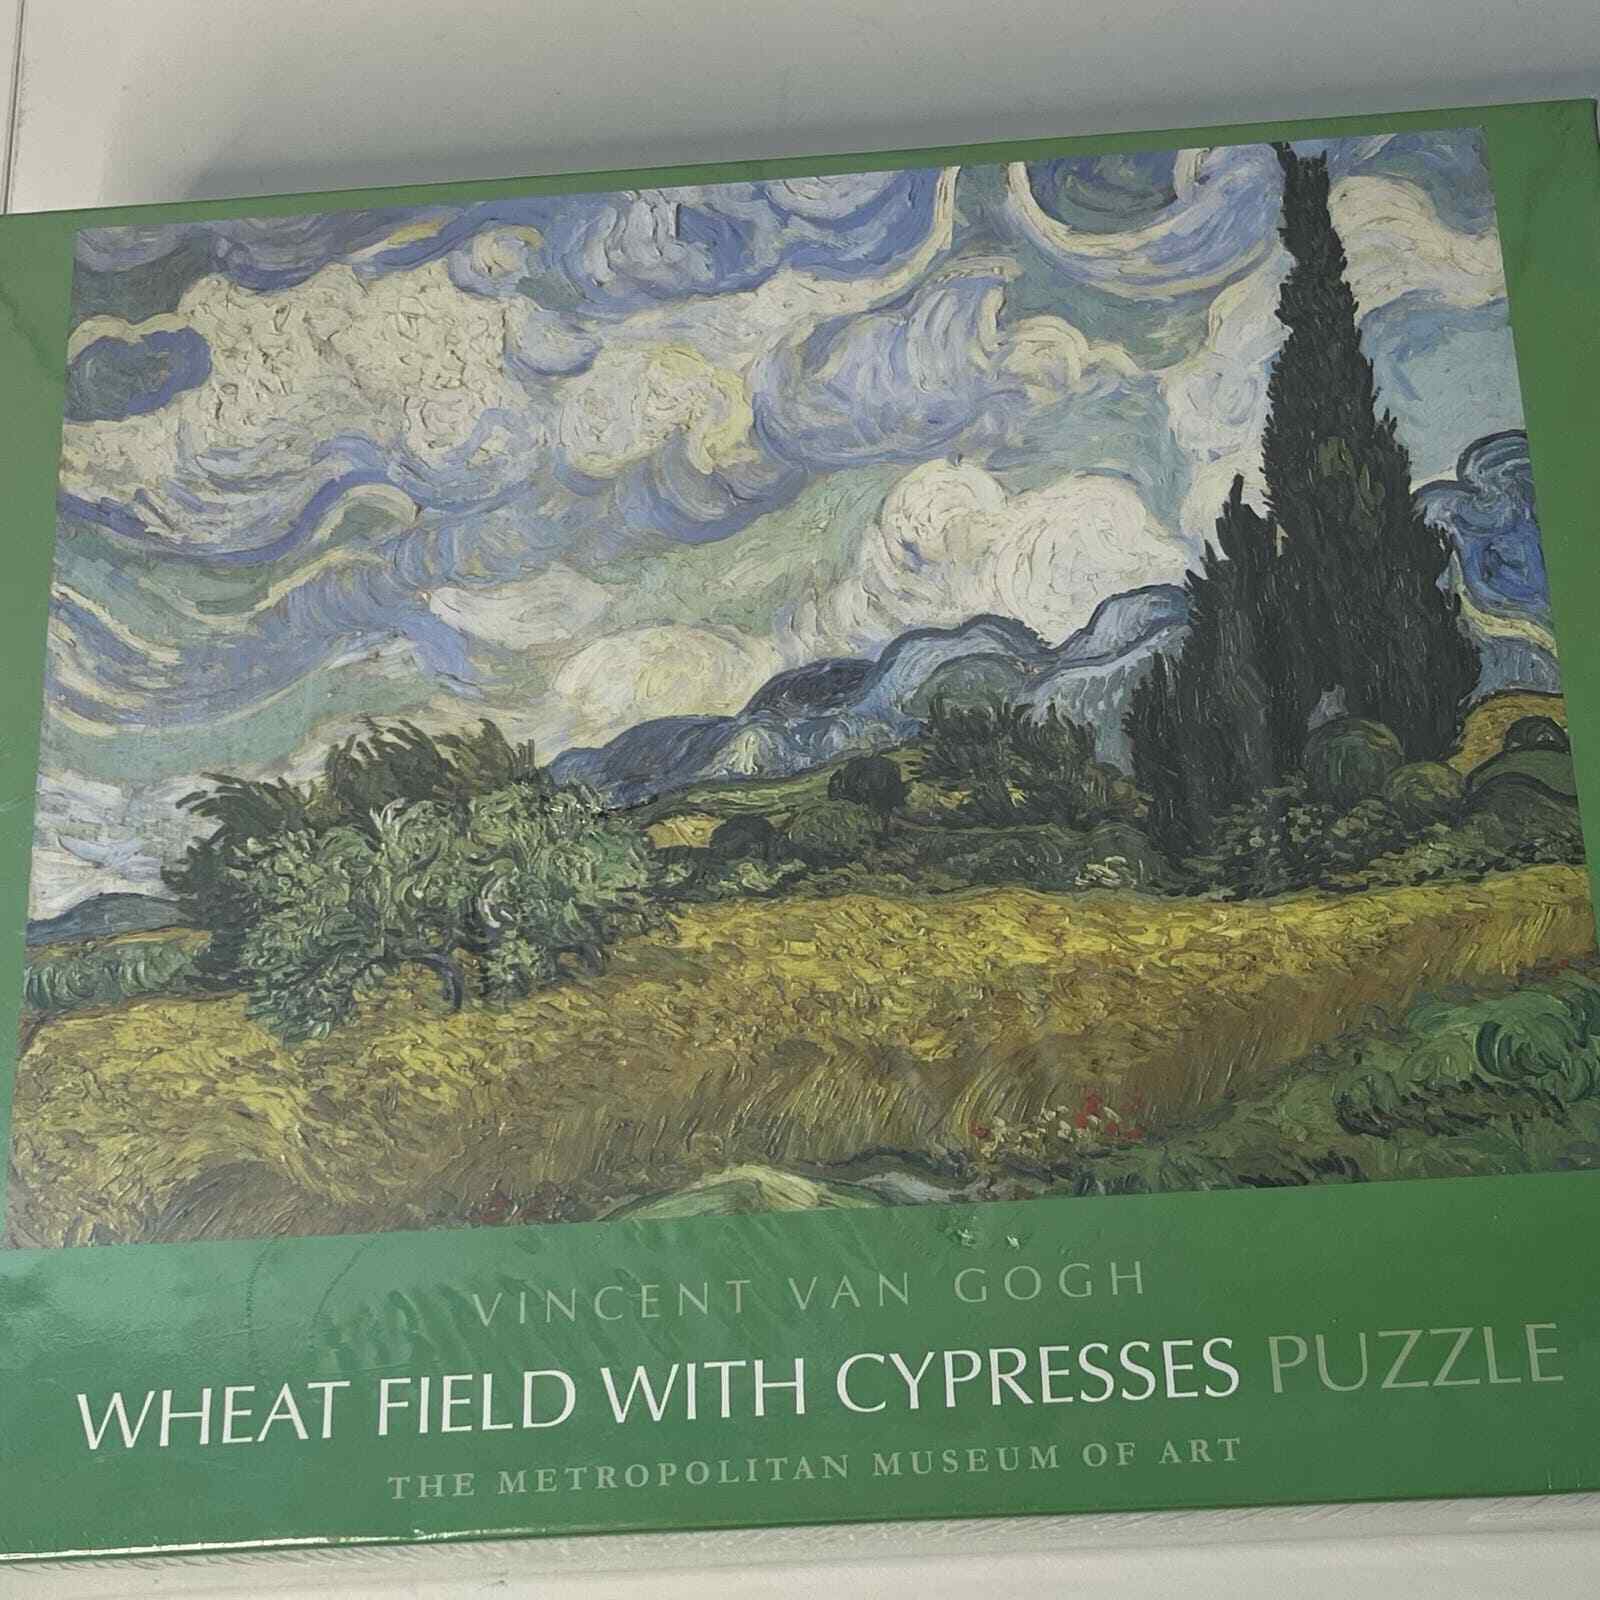  Metropolitan Wheat Field With Cypresses Jigsaw Puzzle (Van Gogh) NEW HTF